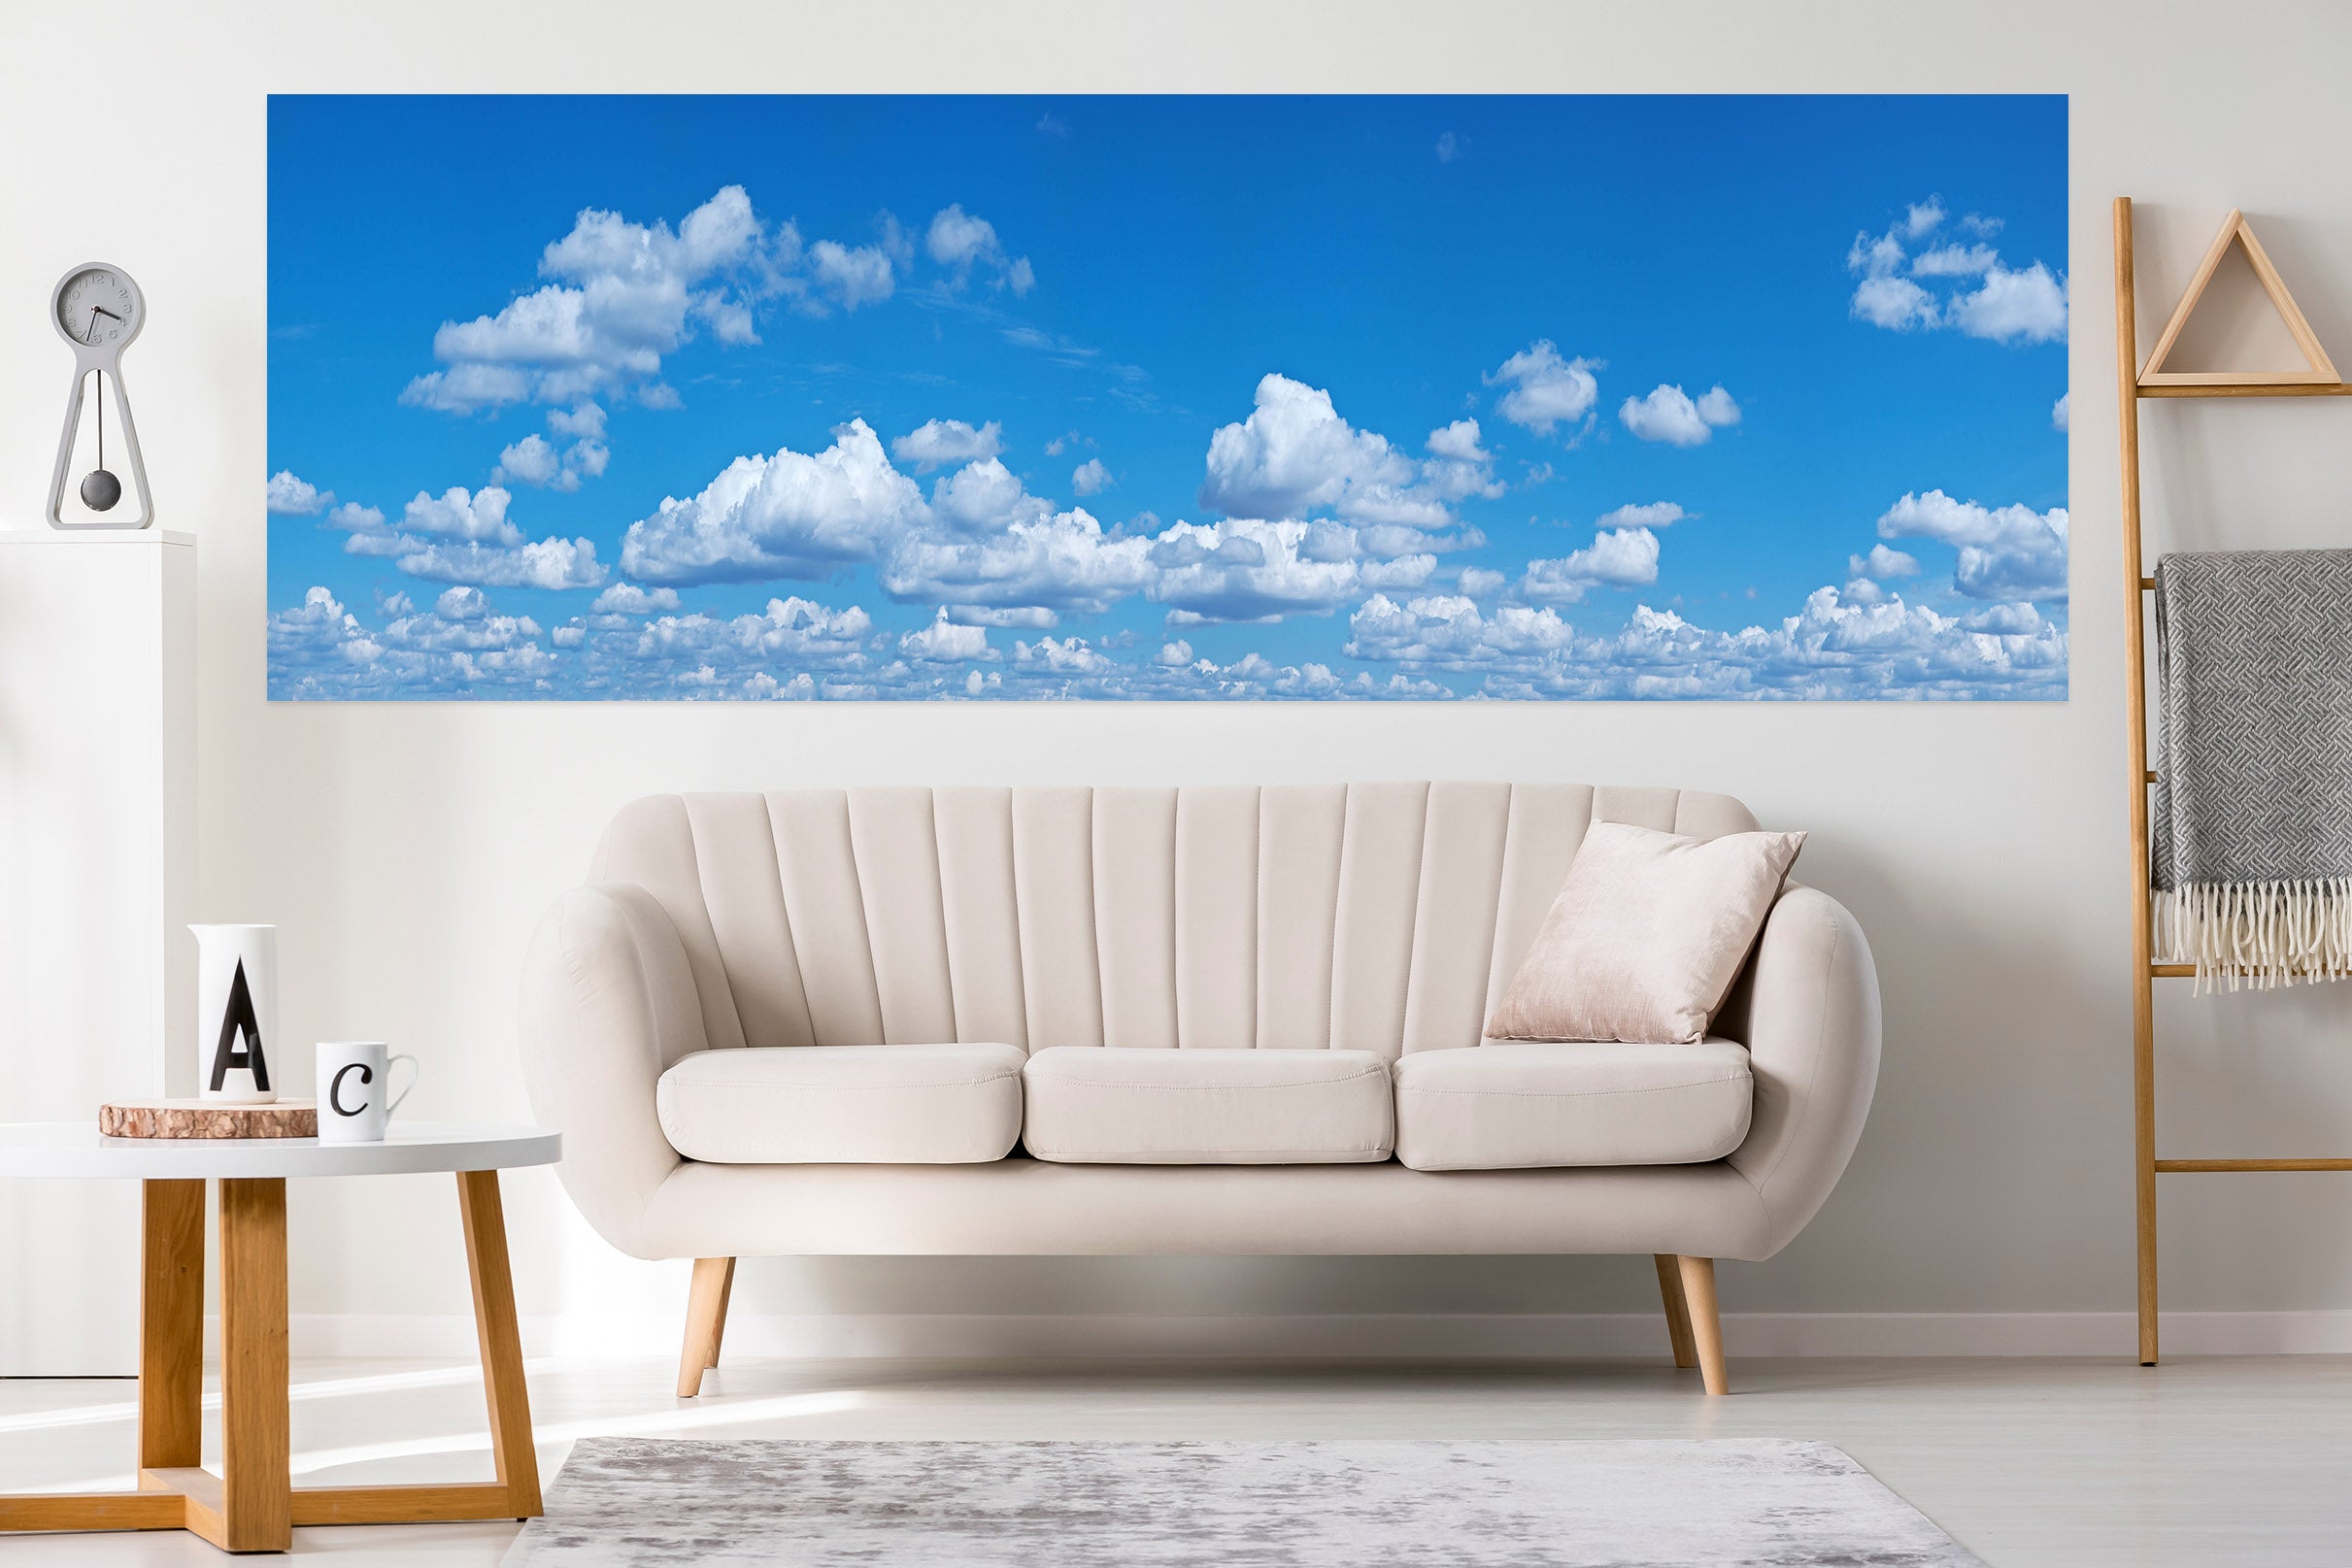 3D White Cloud 1061 Wall Sticker